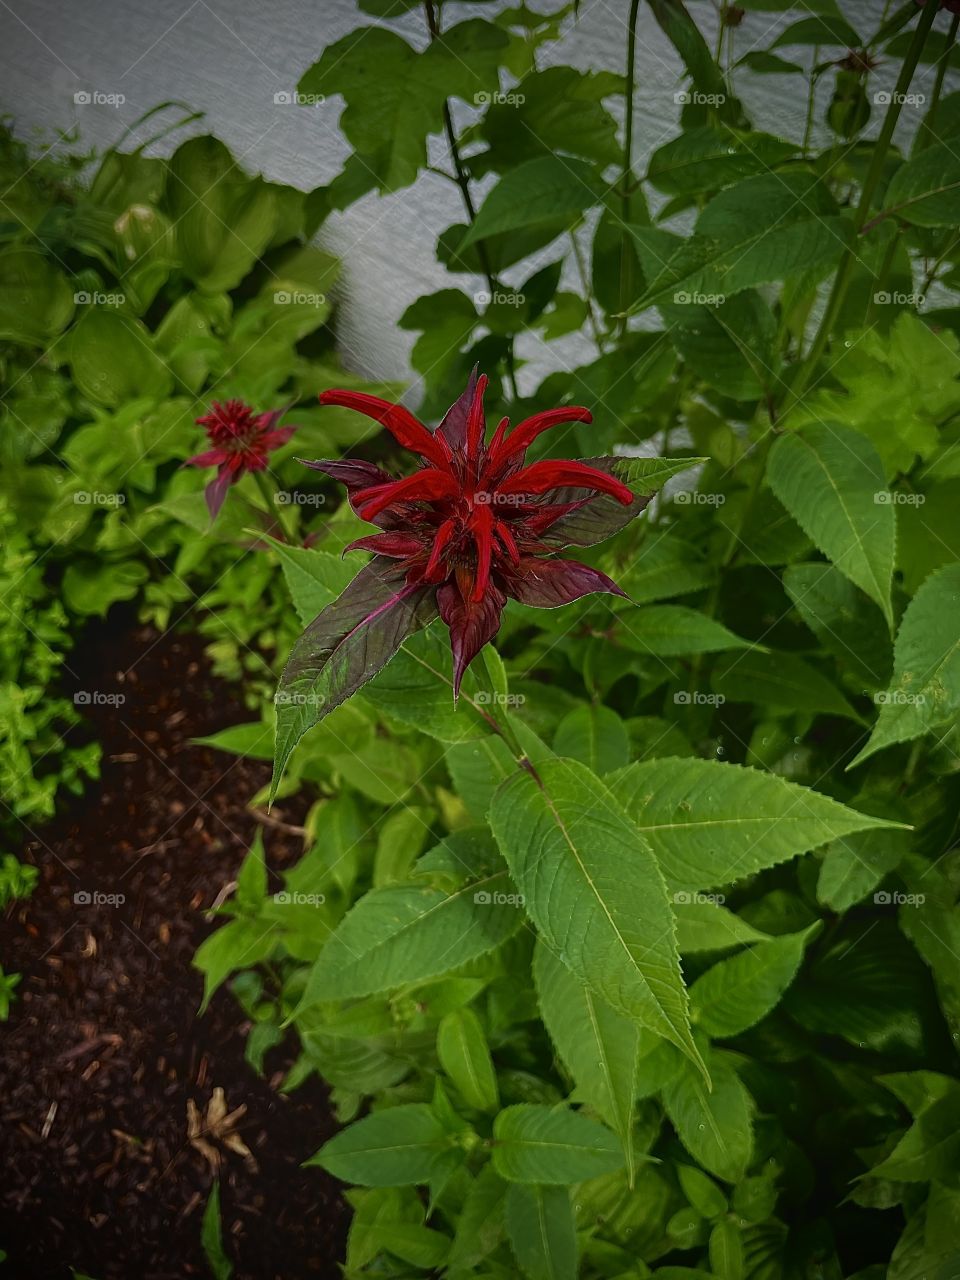 A unique flower in the garden